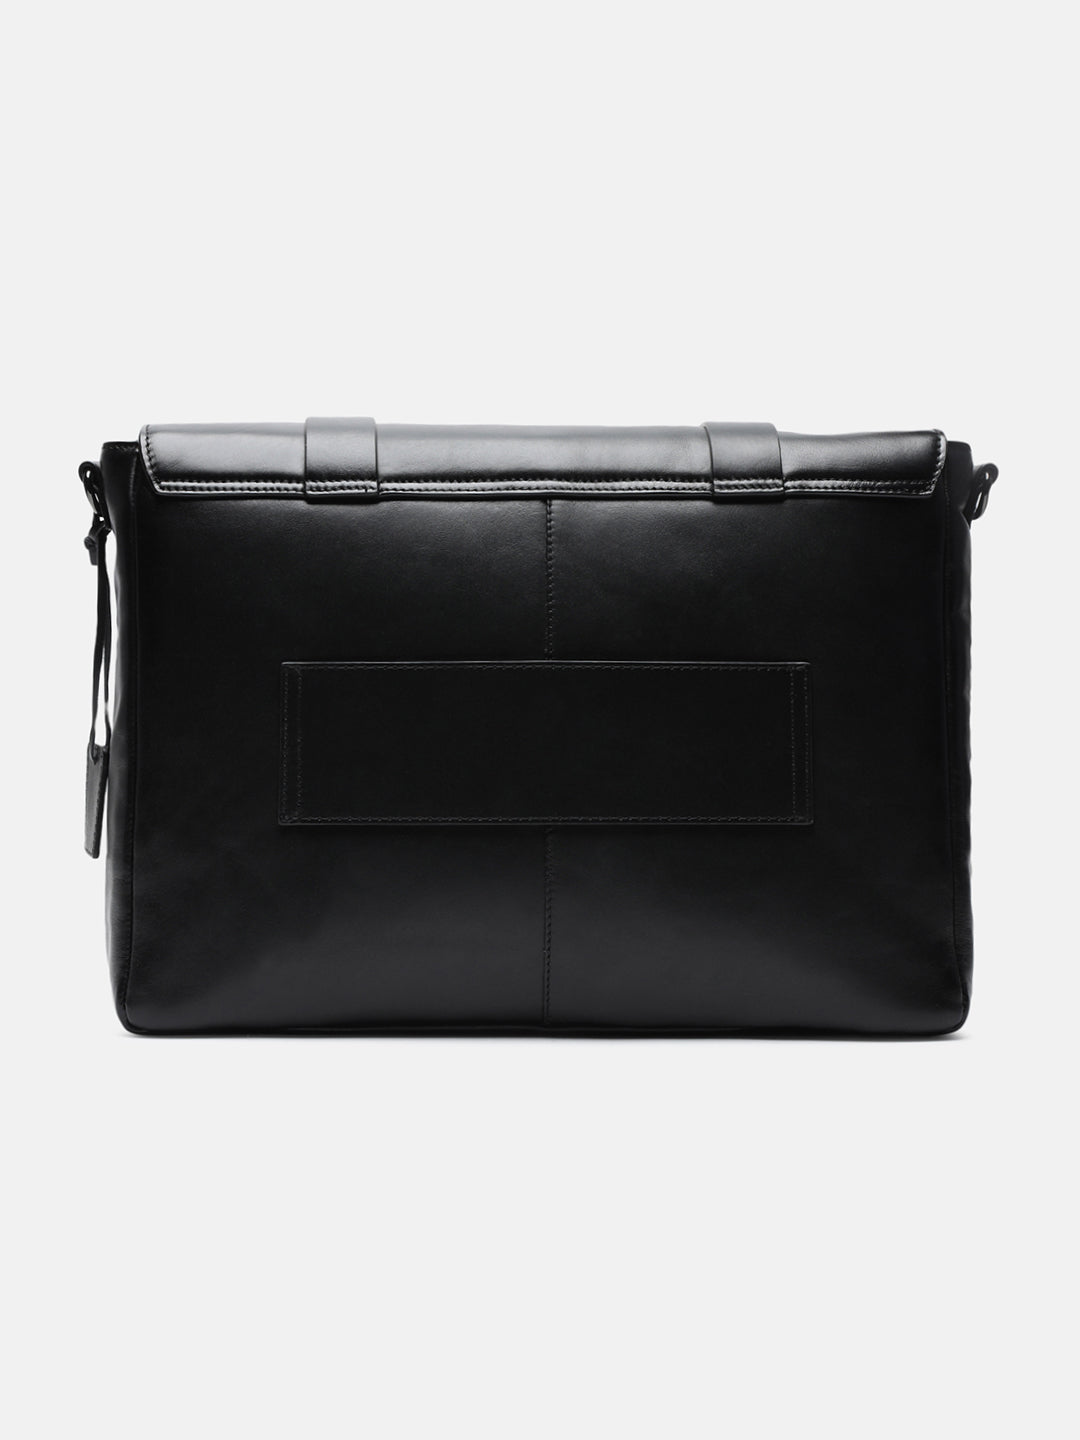 BAGATT Solofra Black Leather Laptop Bag